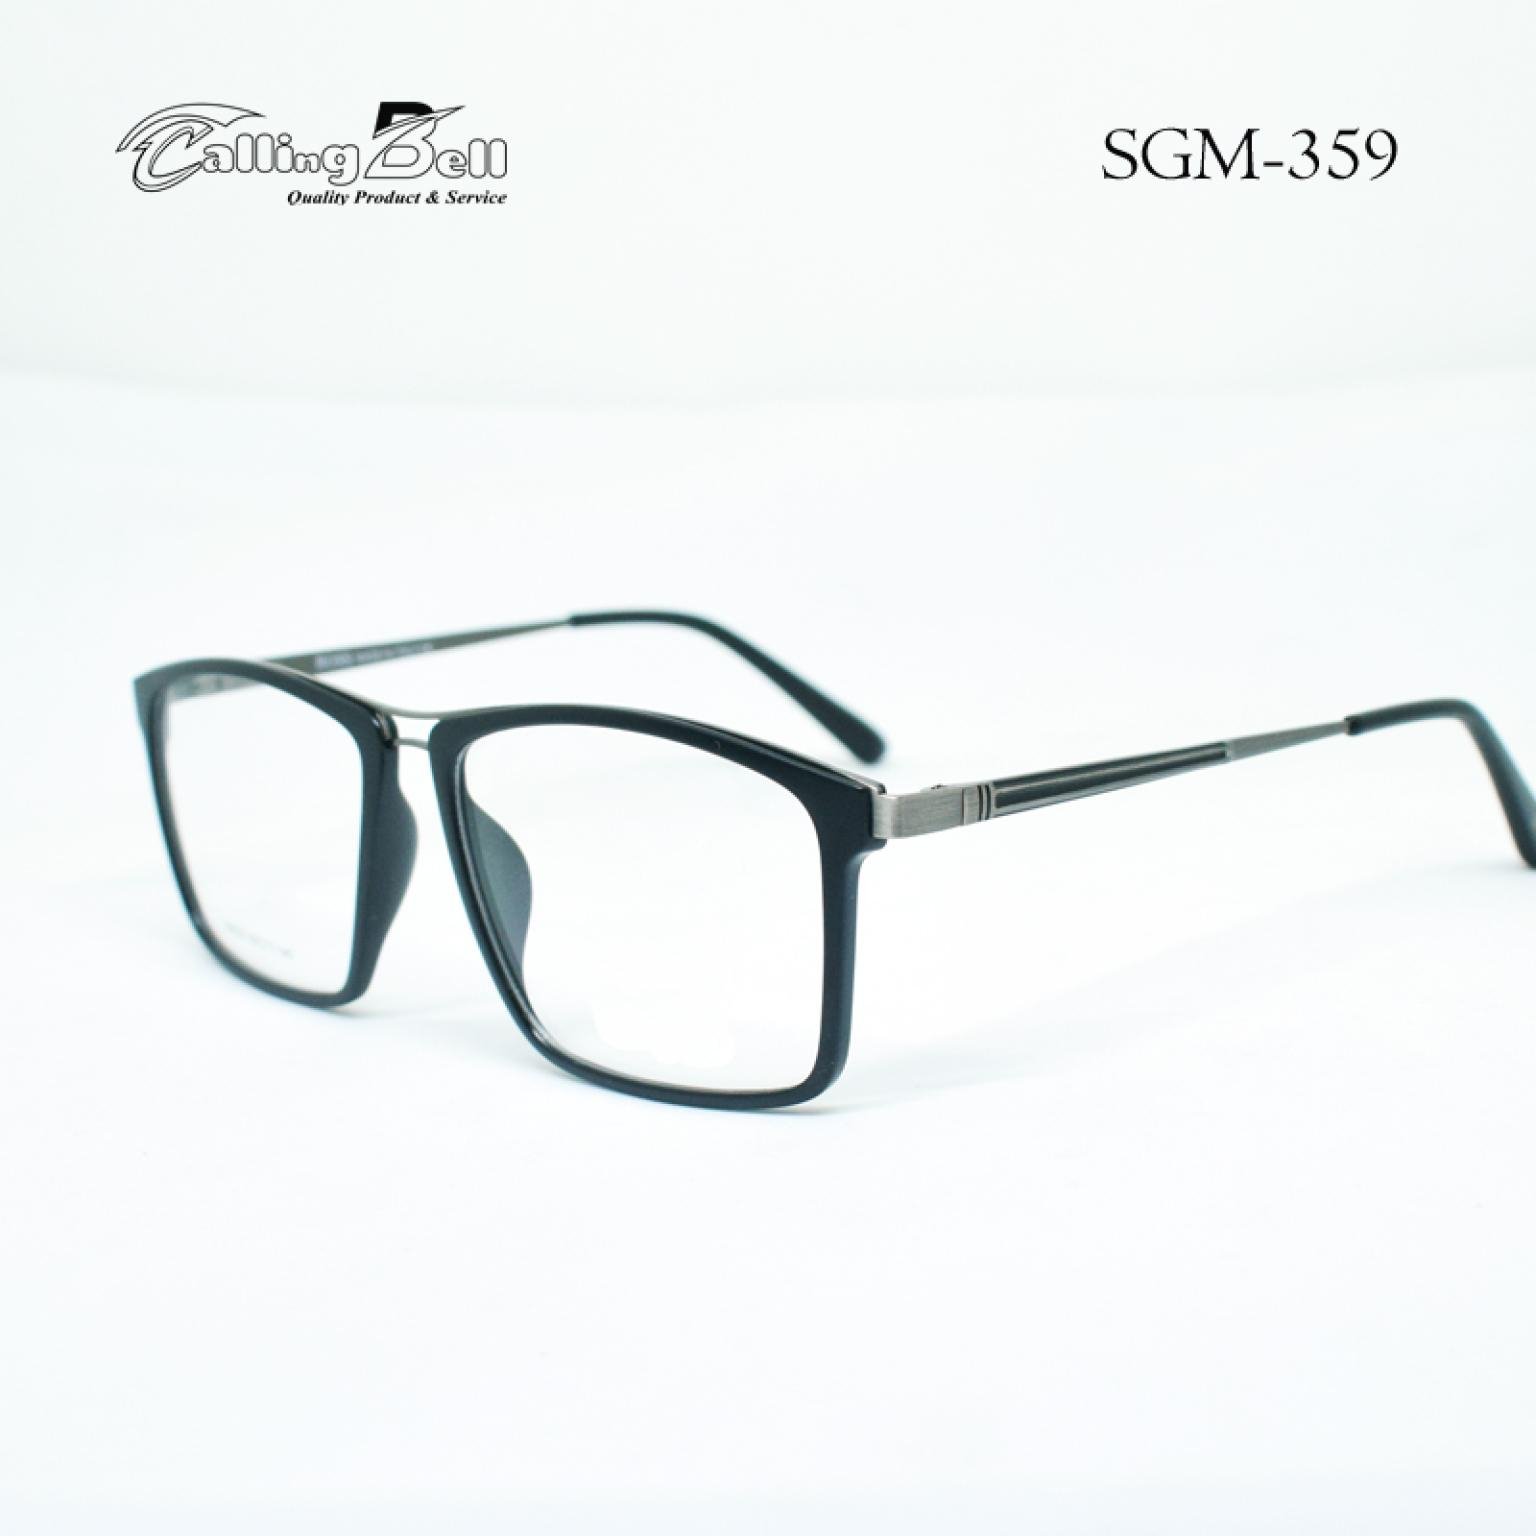 New Design Metal Body Men's Prescription Frame With Best Price Eye Glasses in Blangladesh